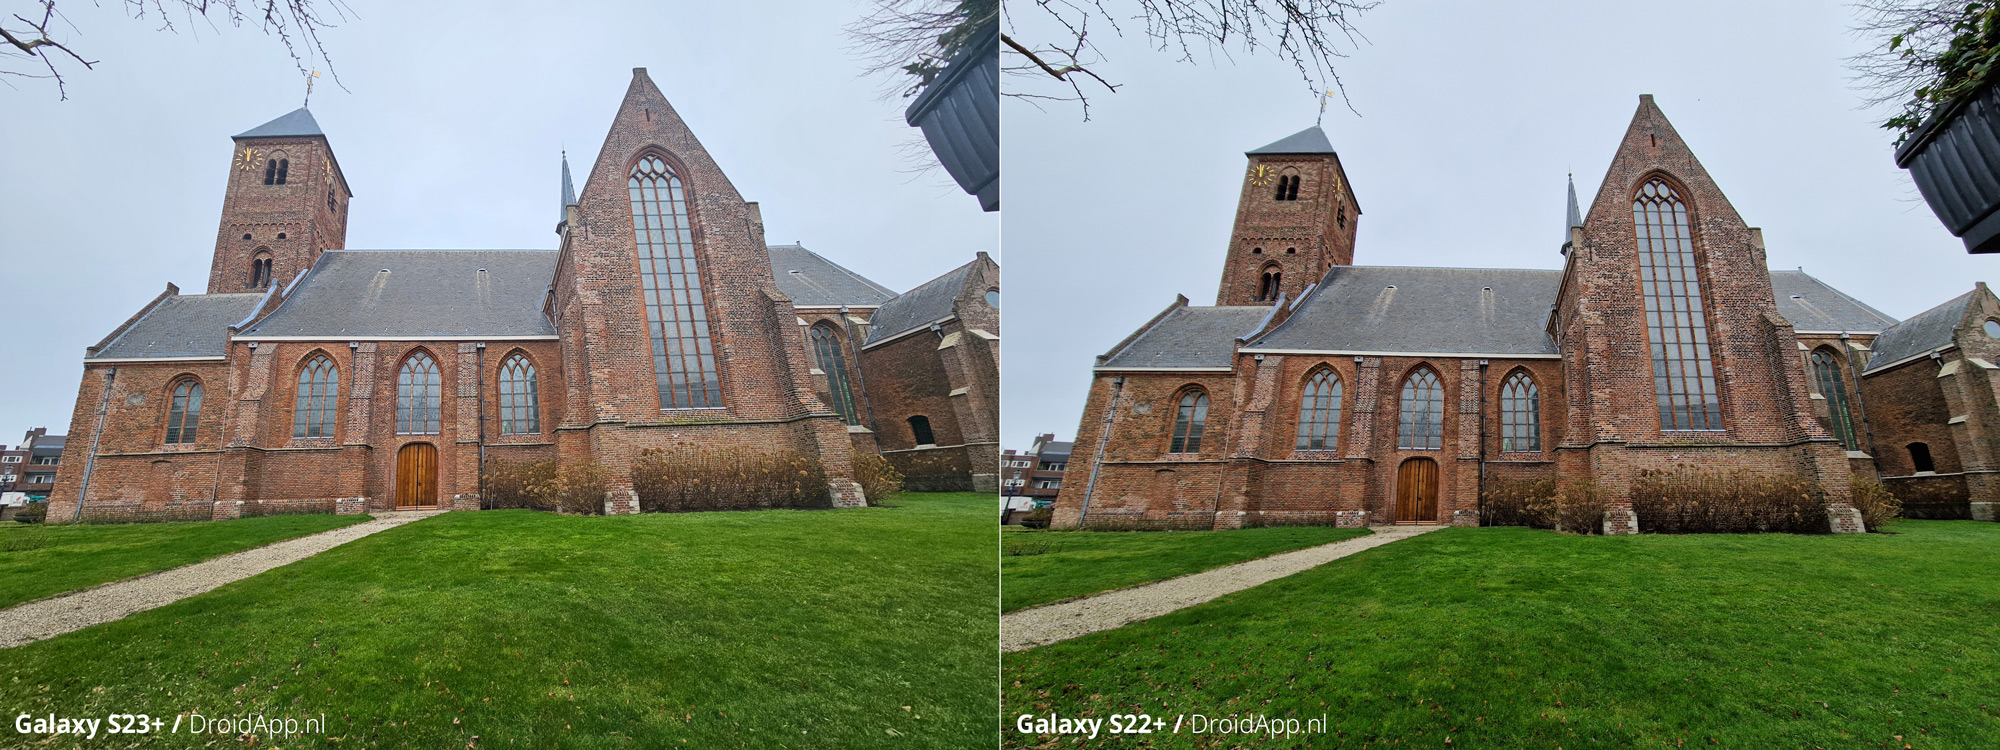 Vergelijking foto Galaxy S23+ vs Galaxy S22 Plus